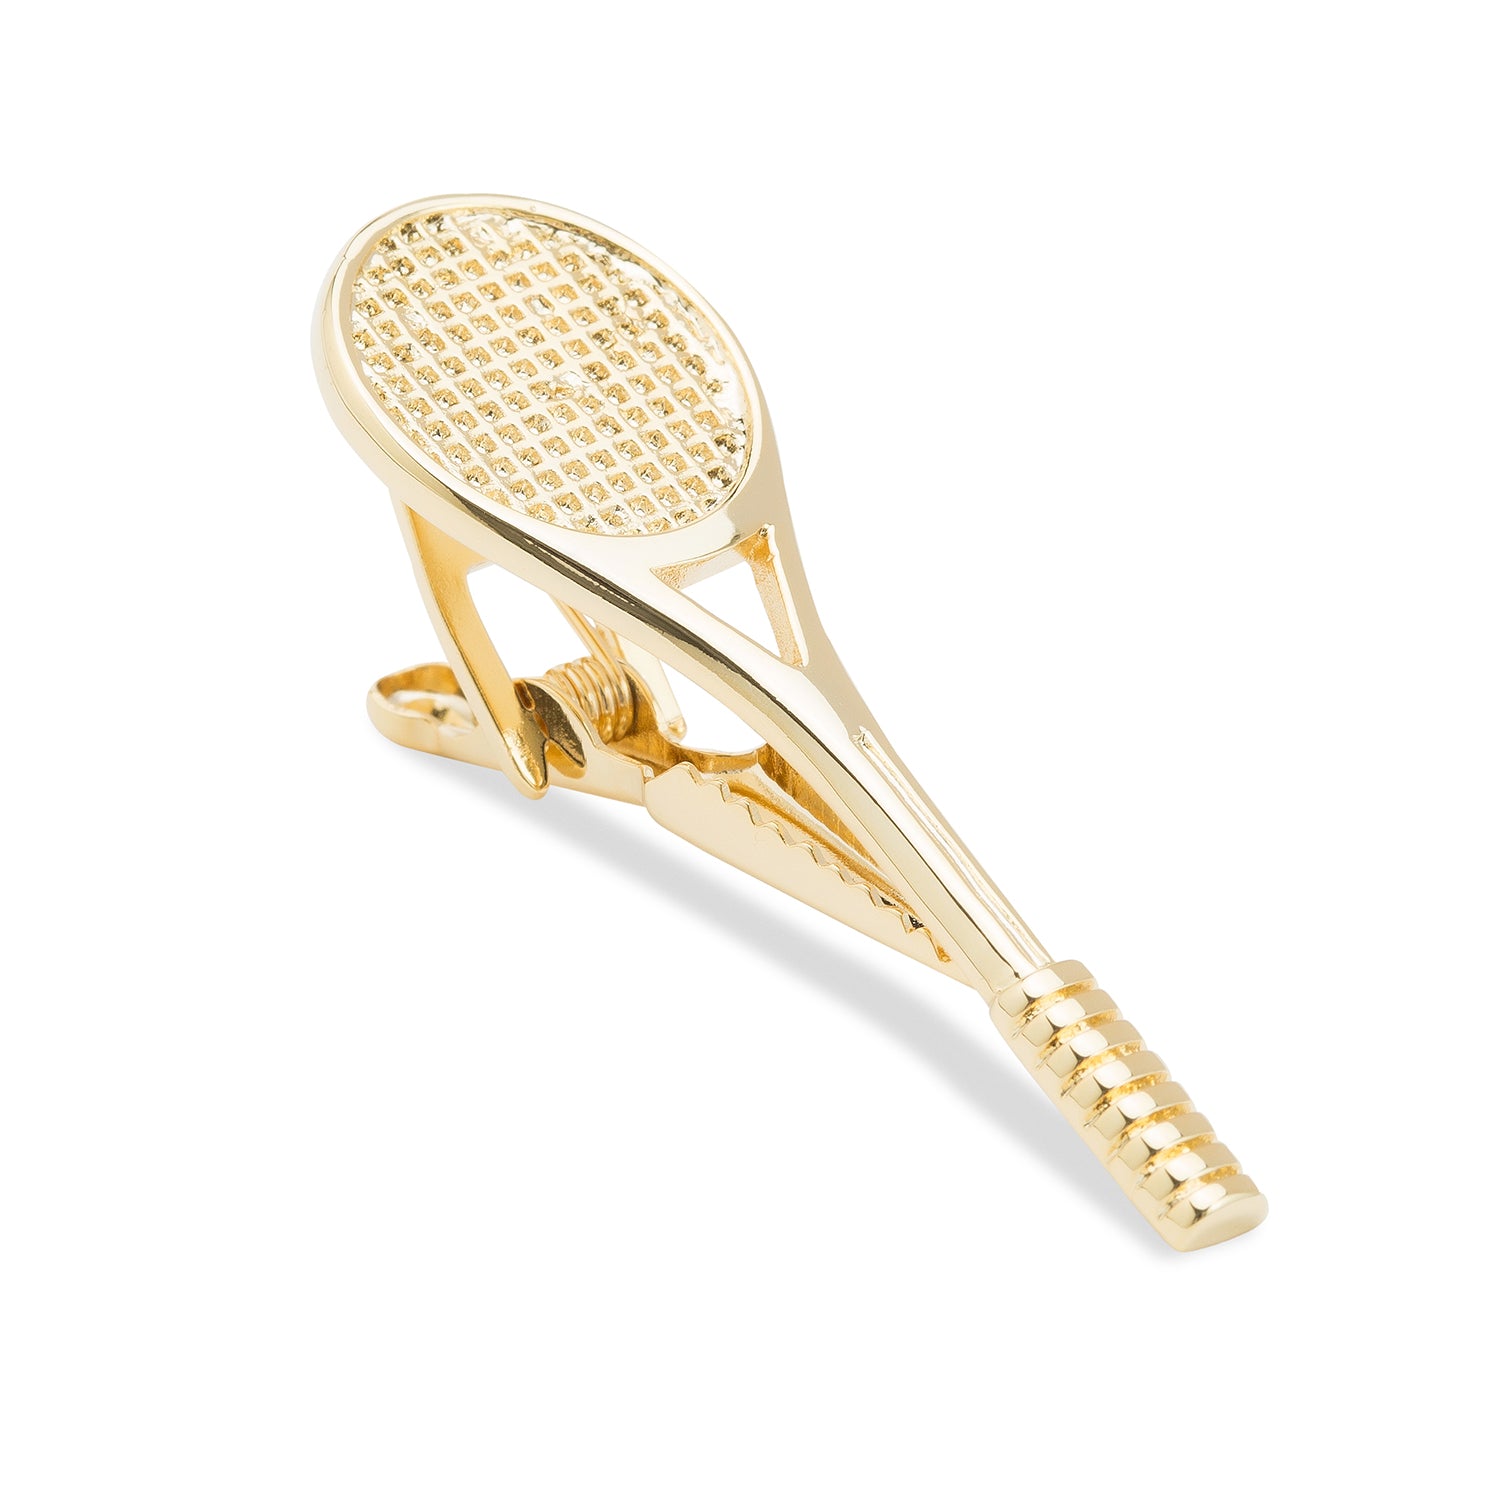 McEnroe Gold Tennis Racquet Tie Bar